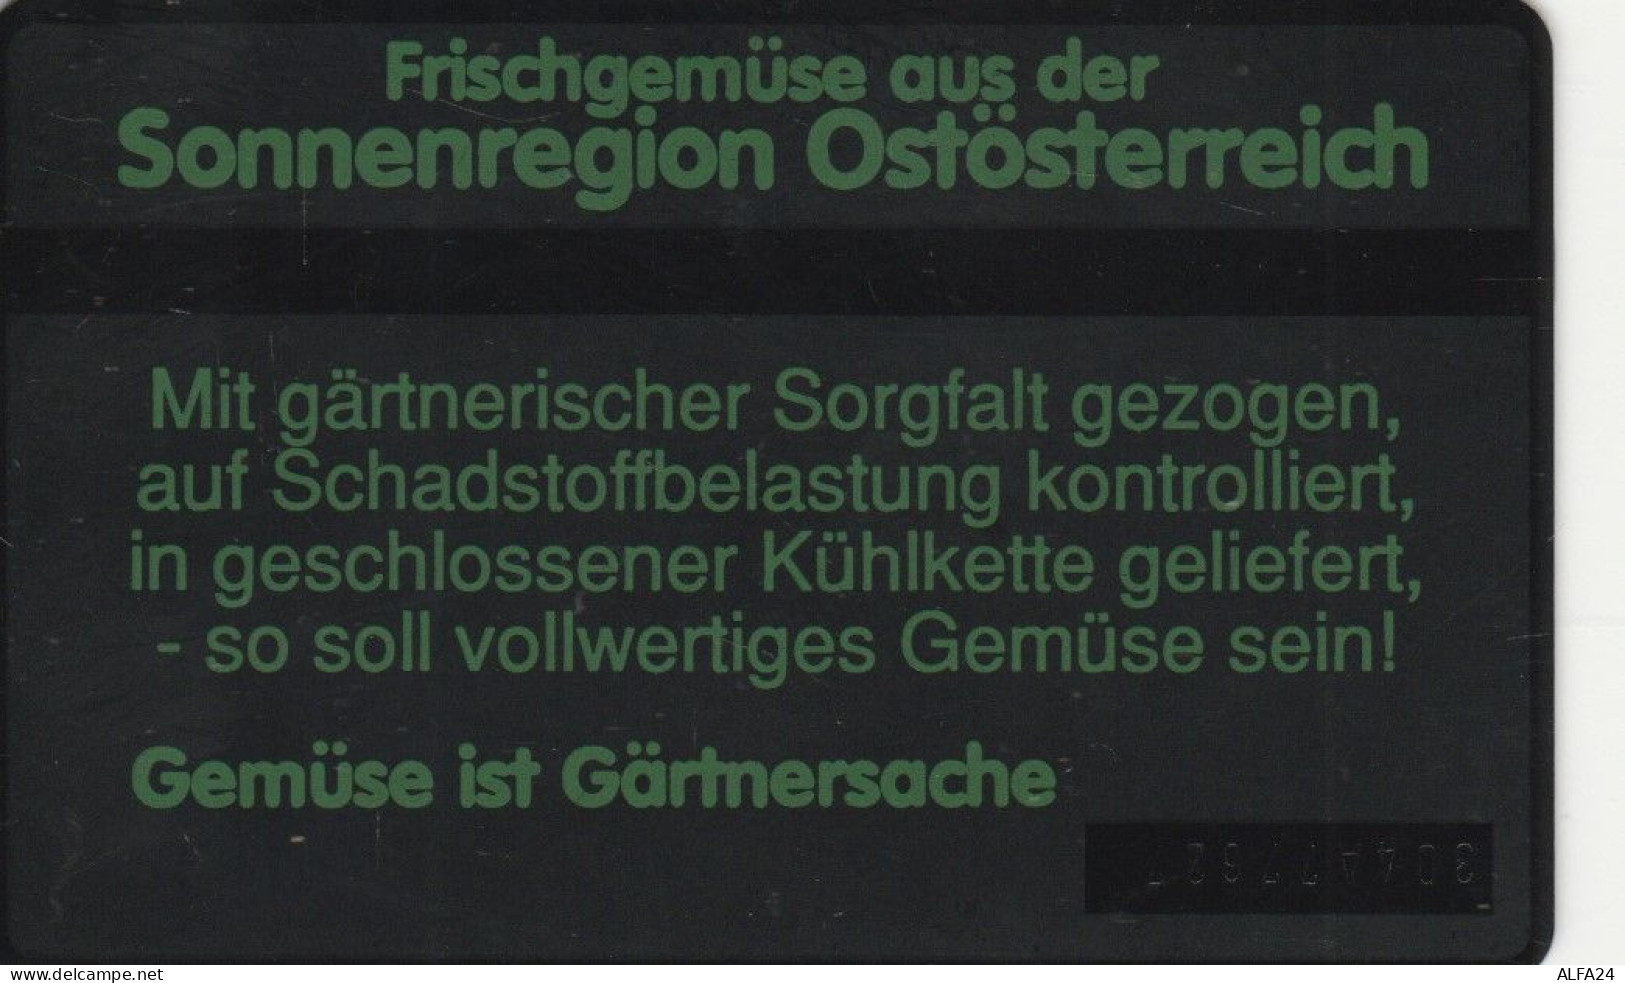 PHONE CARD AUSTRIA (CK6093 - Austria